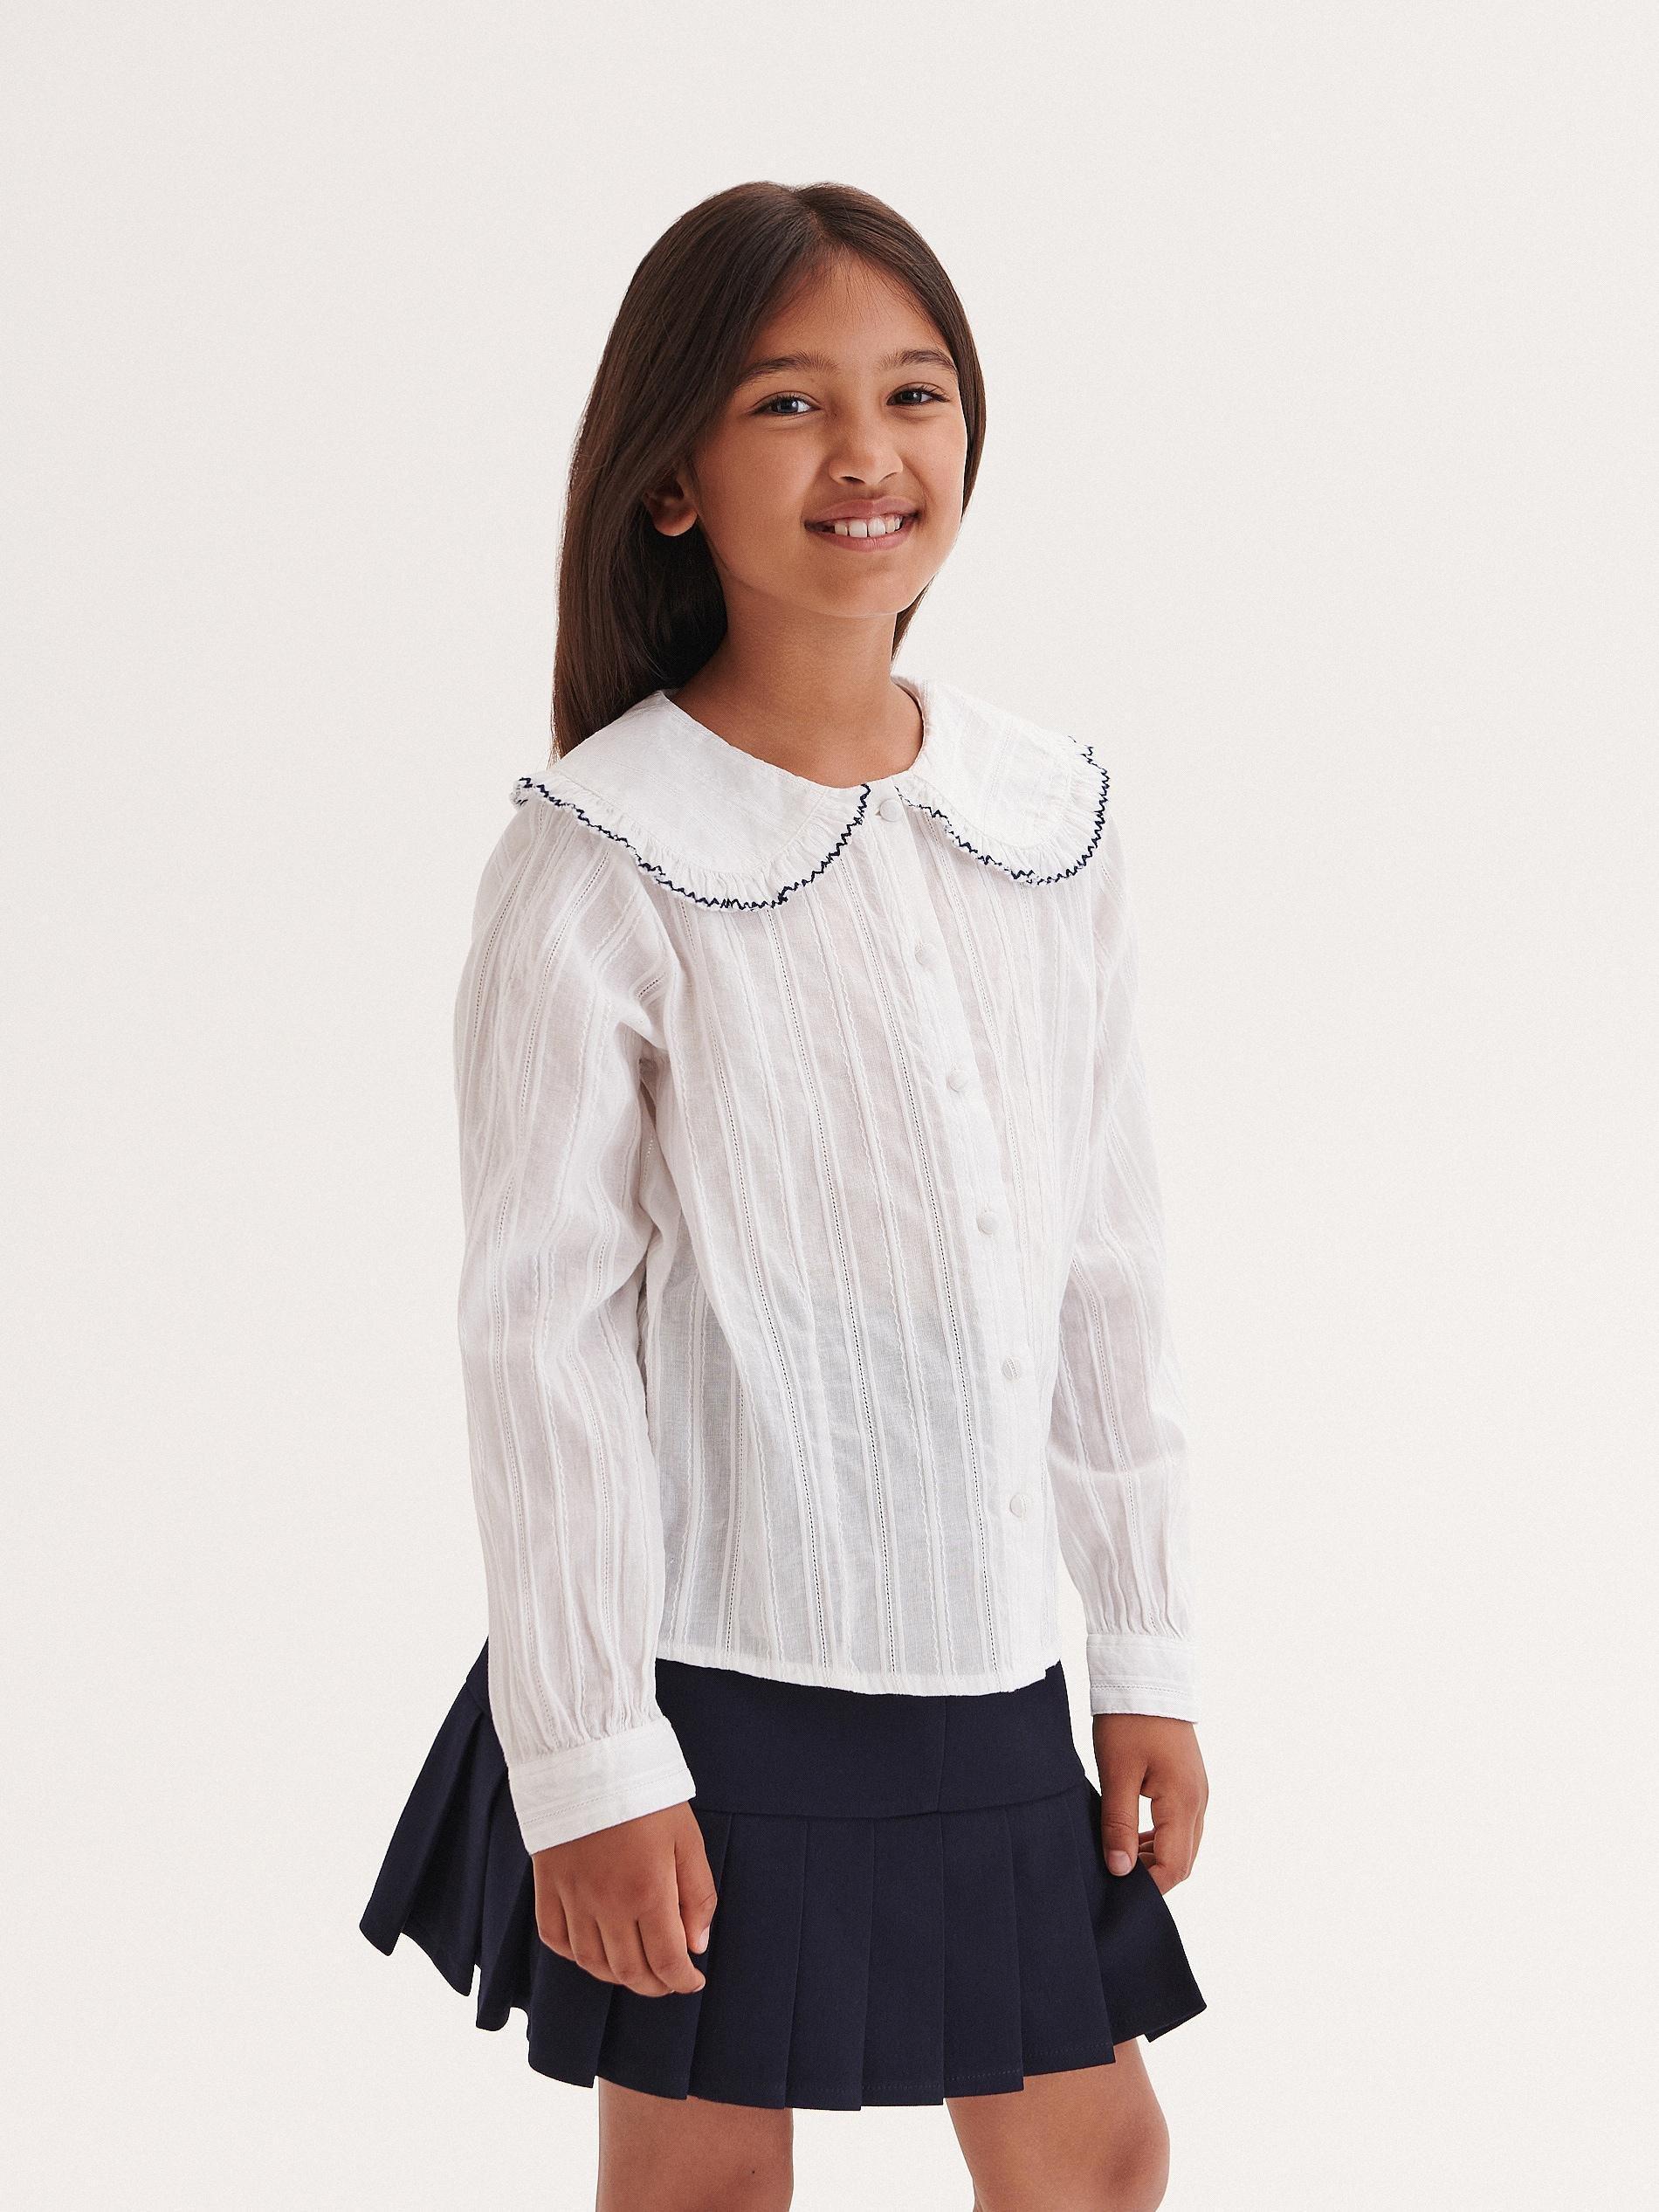 Reserved - White Collar Shirt, Kids Girls